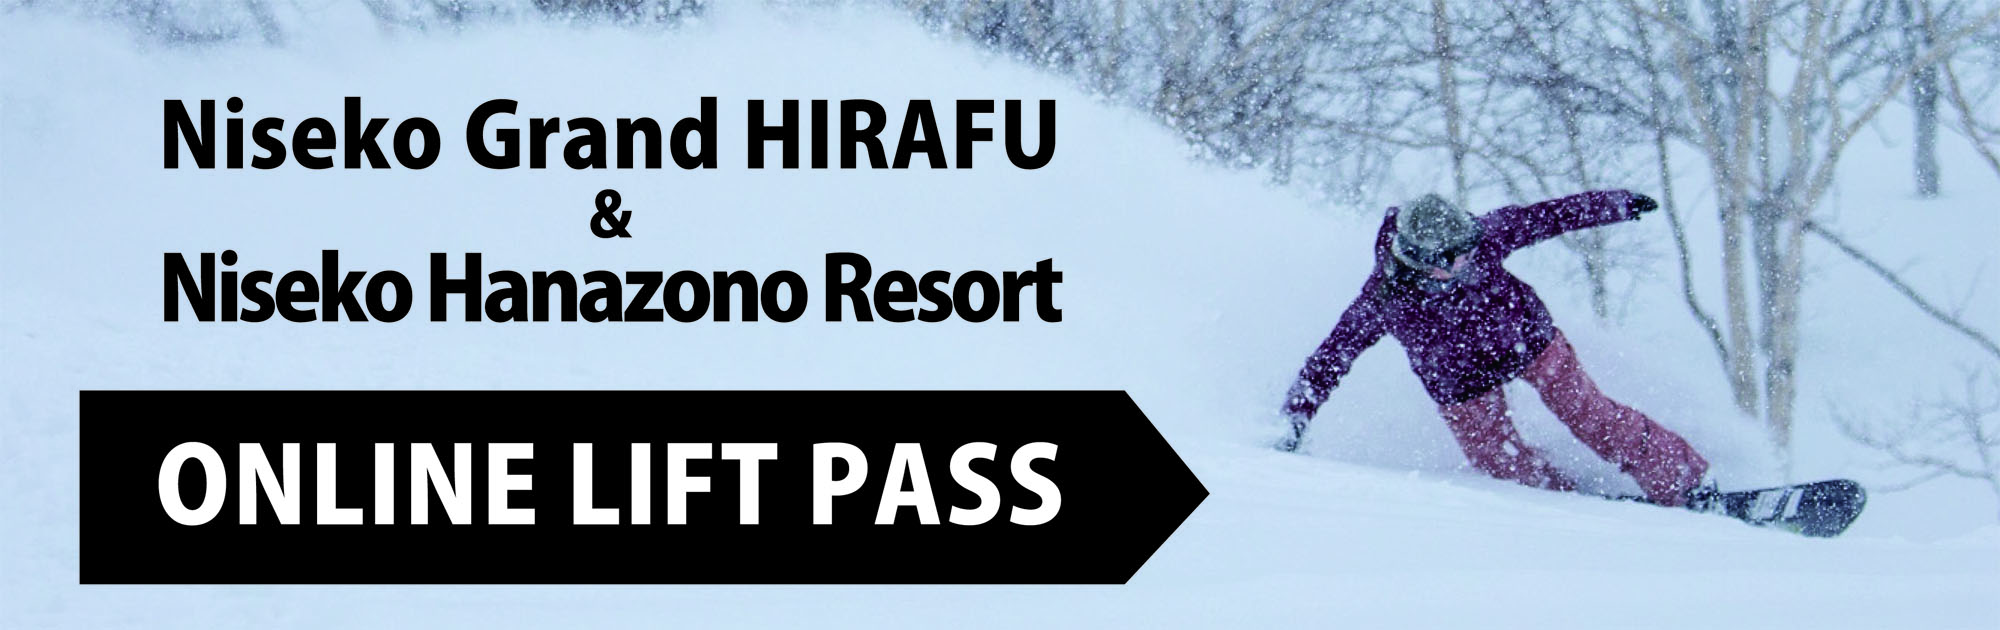 Niseko Grand Hirafu & Niseko Hanazono Resort ONLINE LIFT PASS